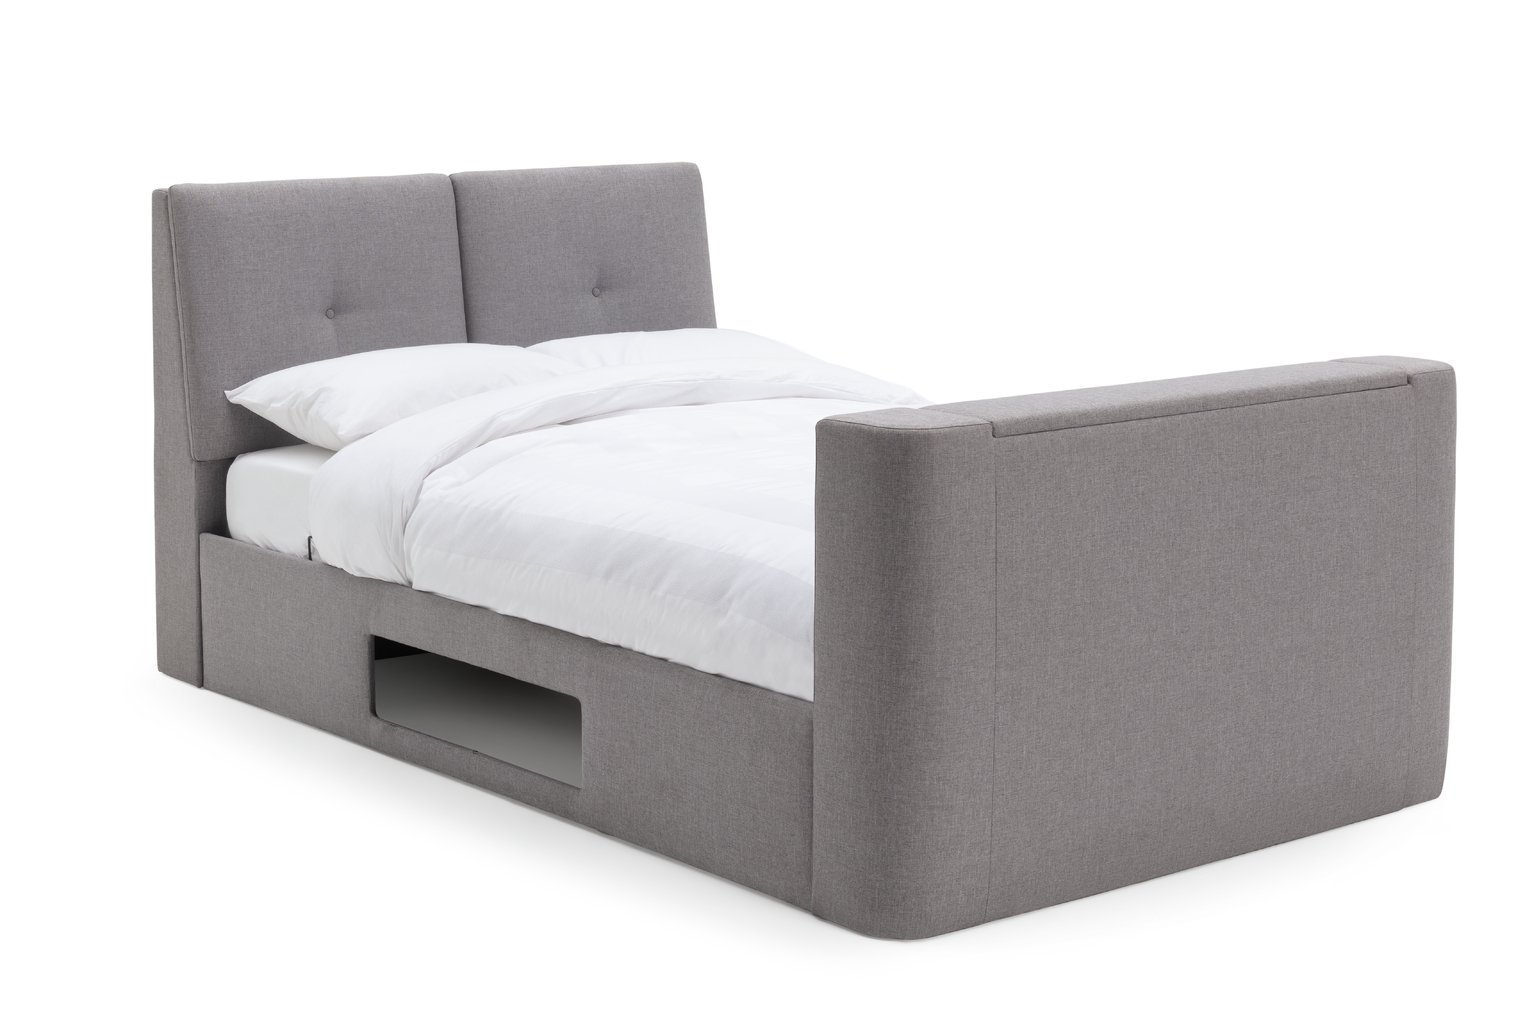 Argos Home Jakob Double TV Ottoman Bed Frame - Grey